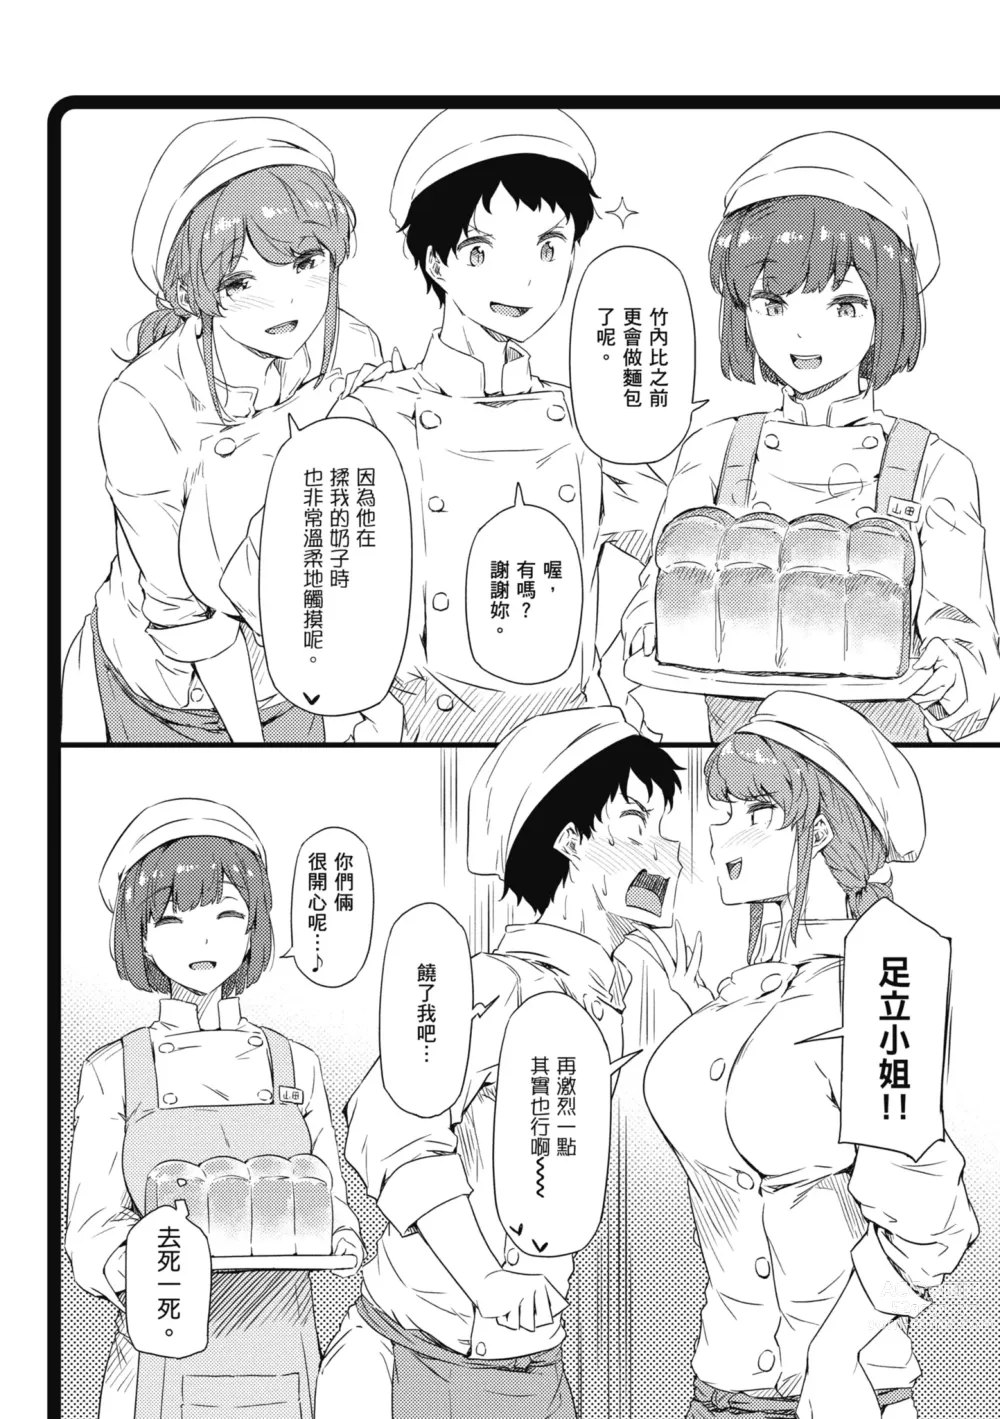 Page 217 of manga 探索歡愛新境界 (decensored)